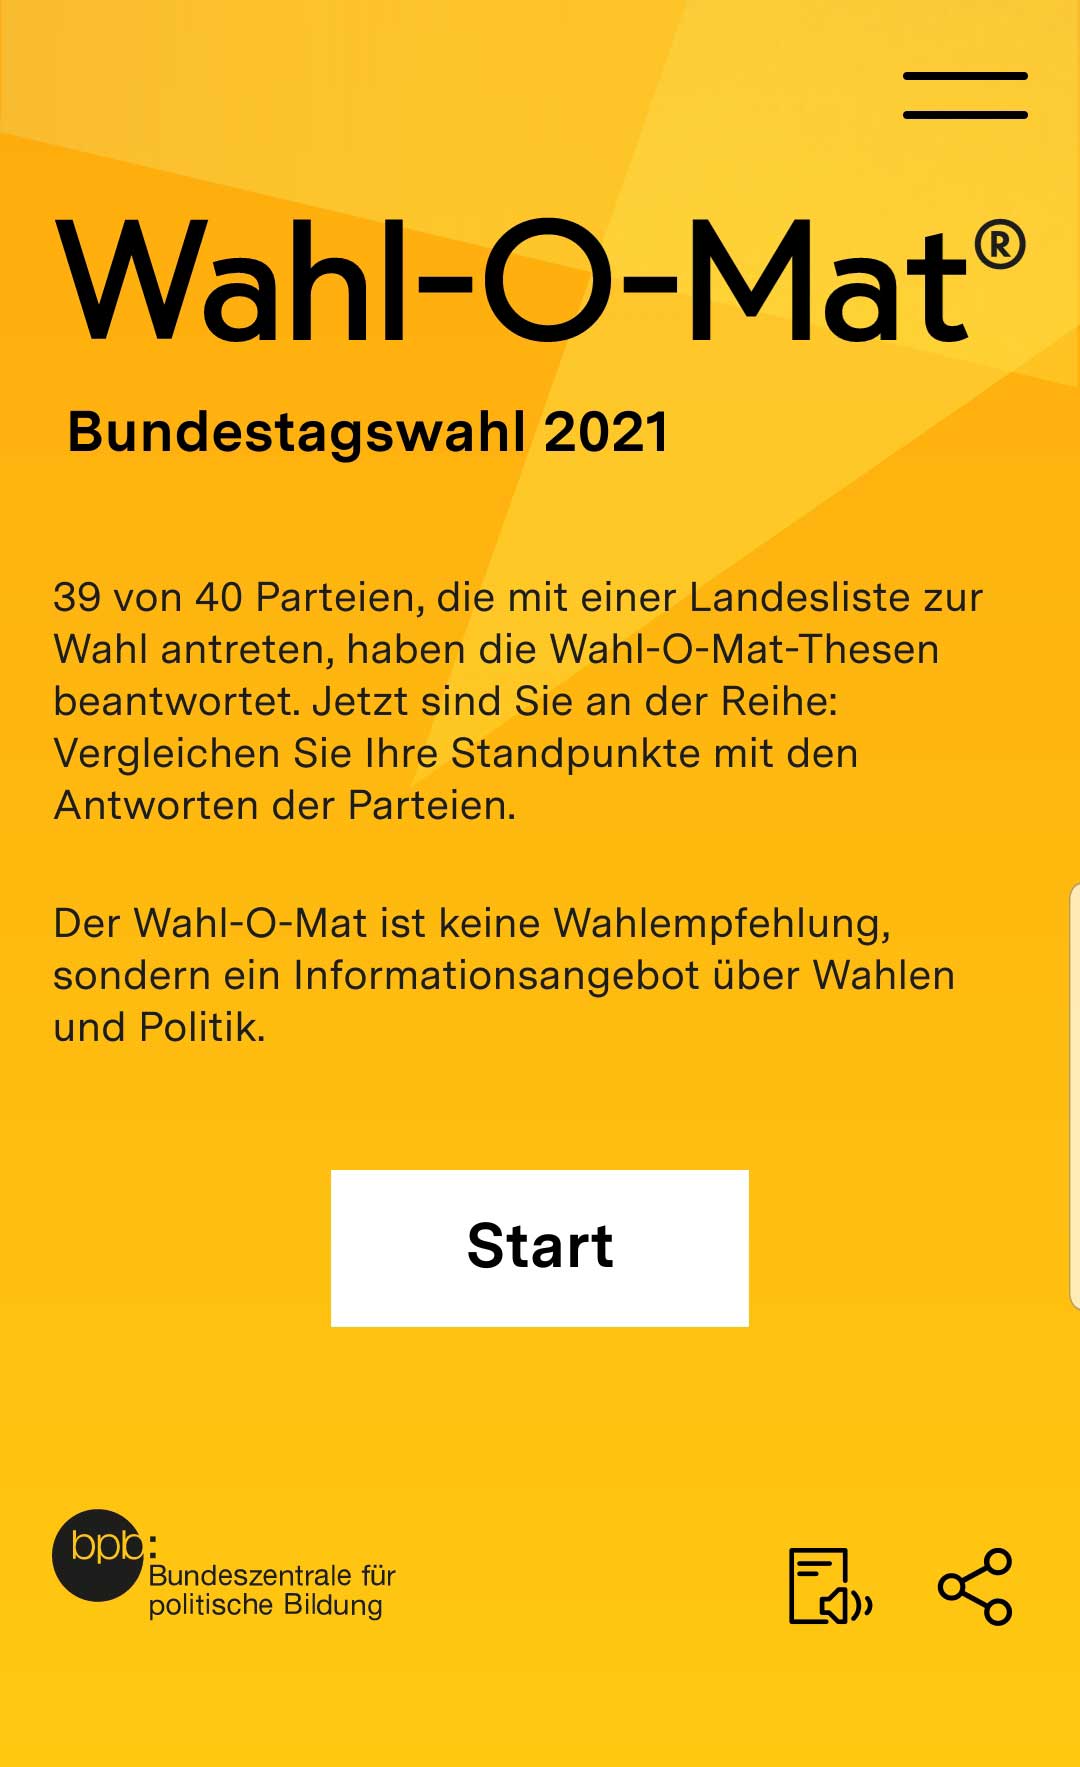 Der Wahl-O-Mat zur Bundestagswahl 2021